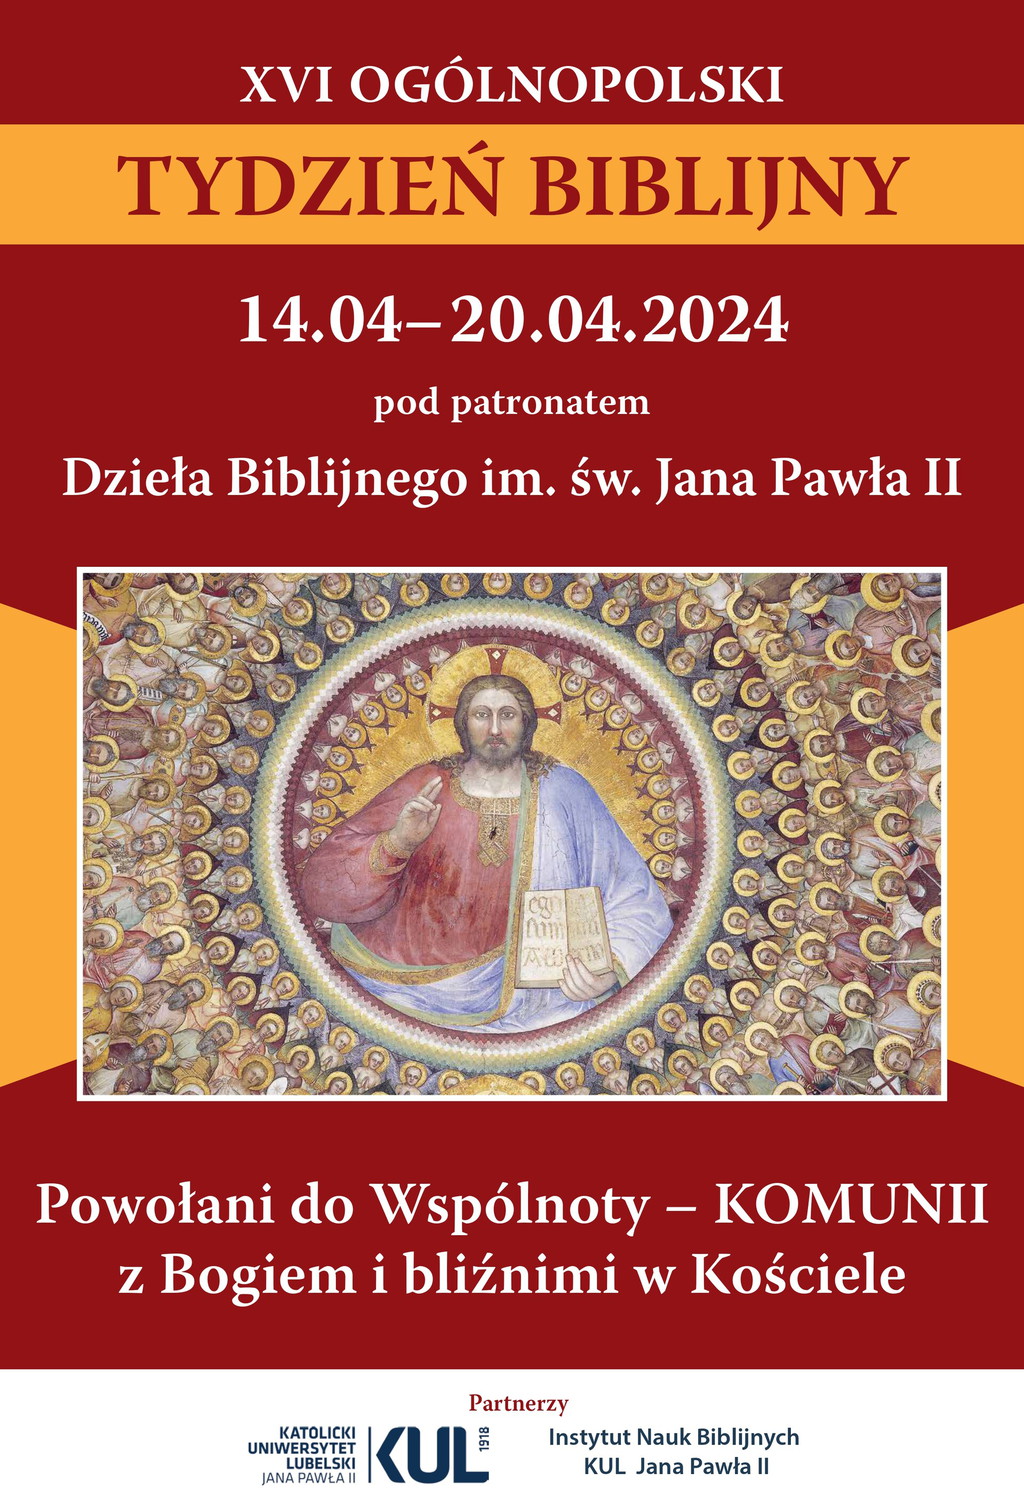 Read more about the article XVI Ogólnopolski Tydzień Biblijny